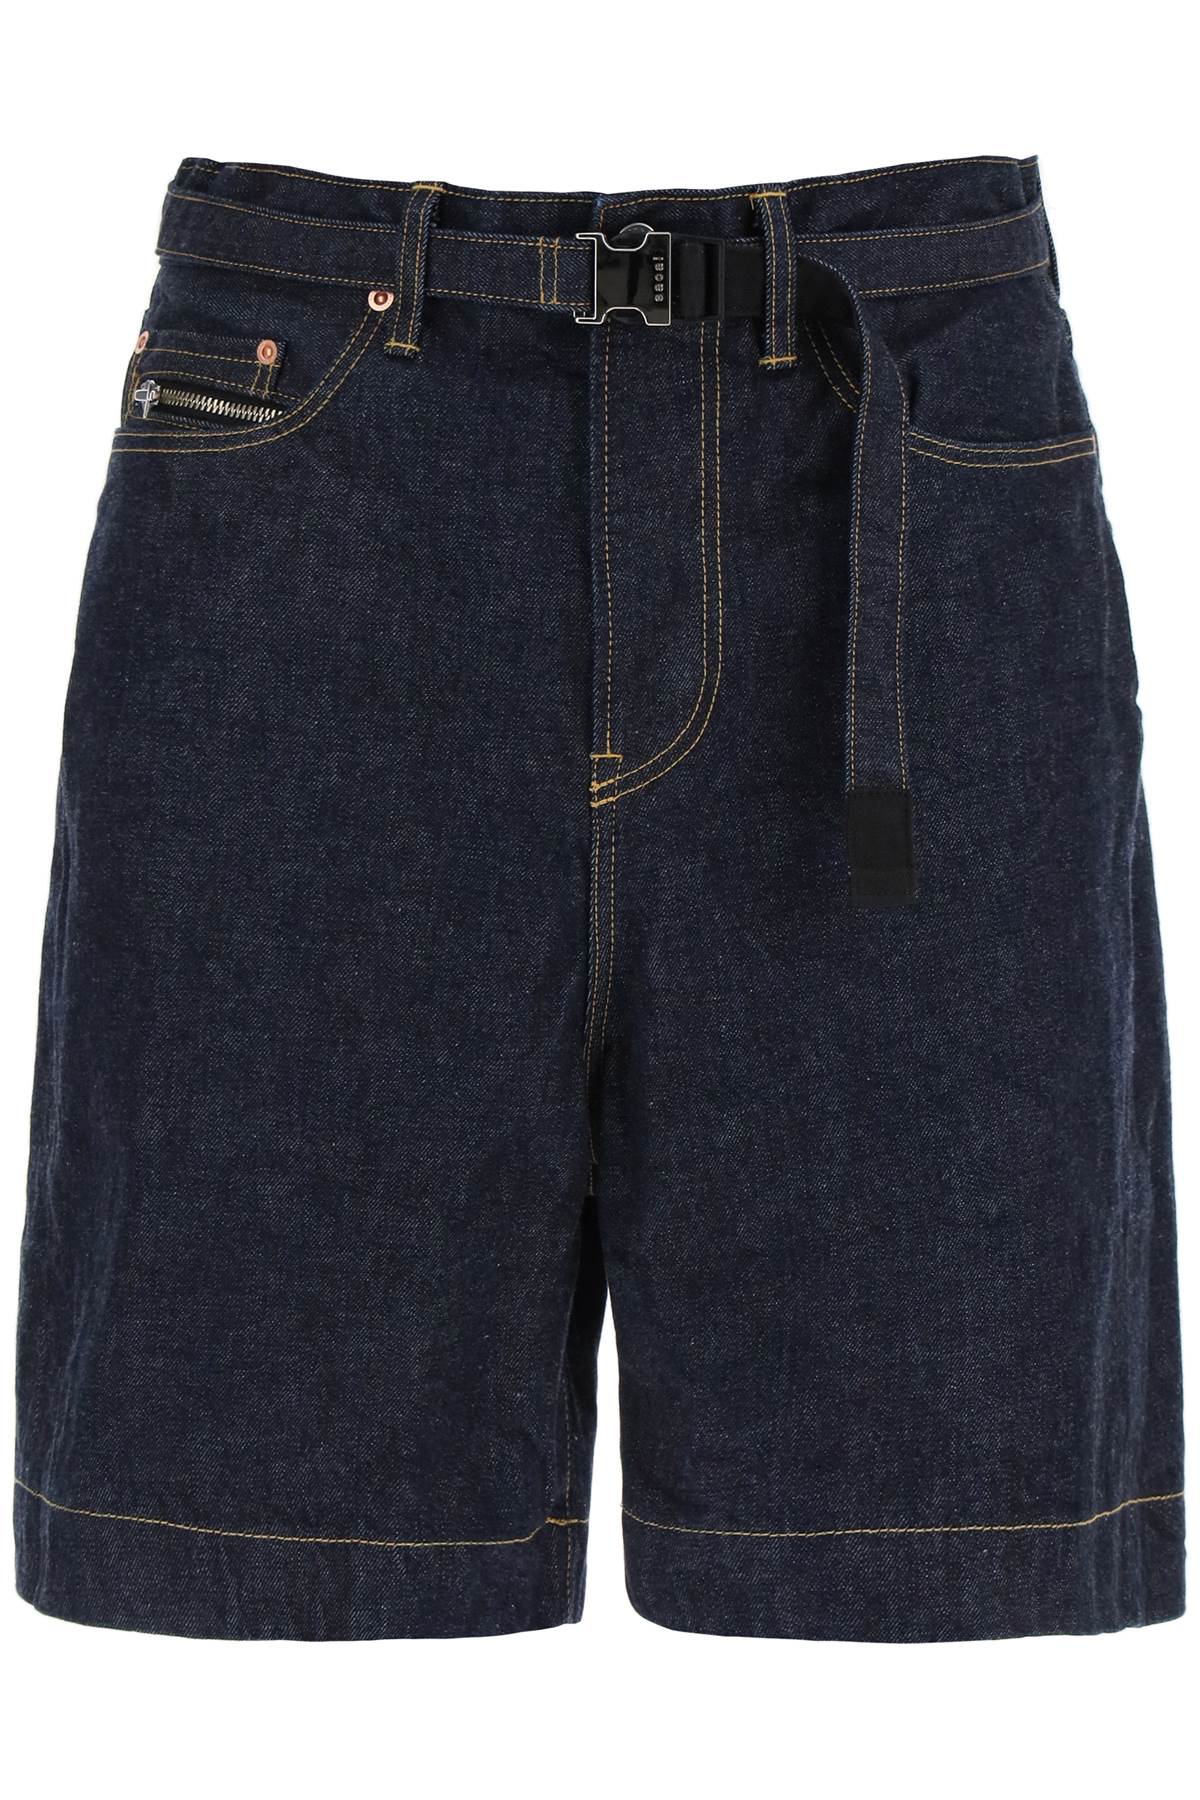 Sacai denim bermuda shorts with removable belt-0